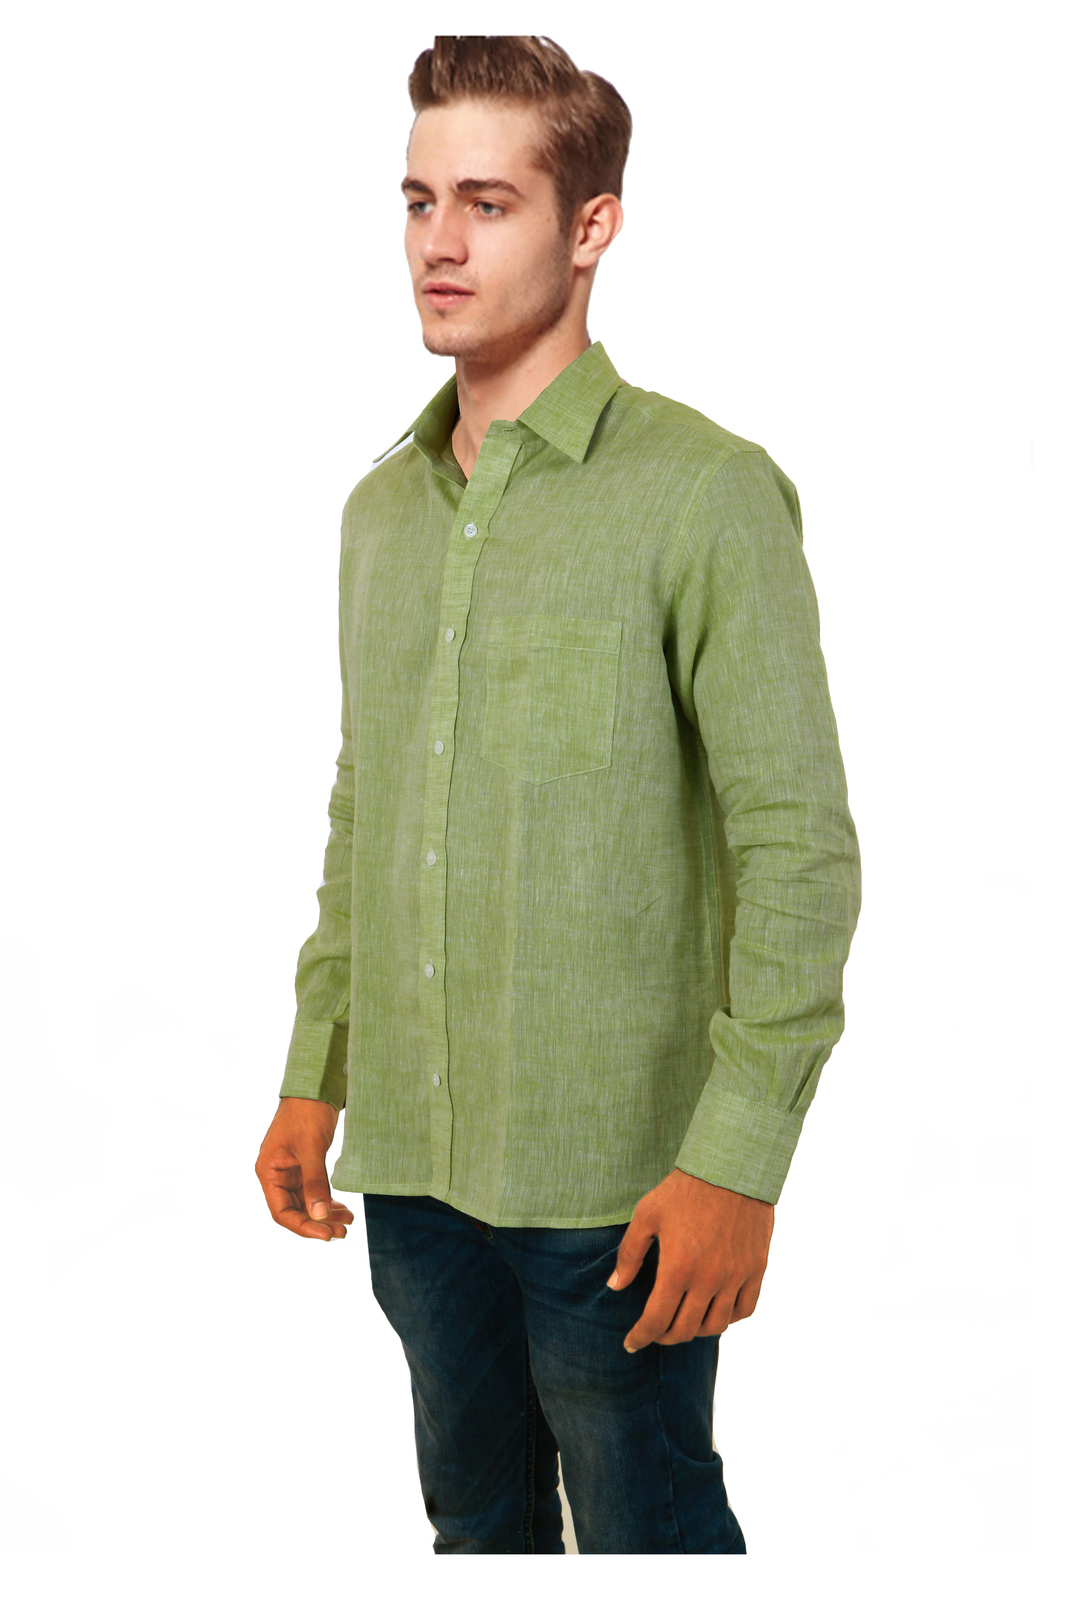 COBRIO Pure Linen Light Green Long Sleeve Shirt - Casual Shirts